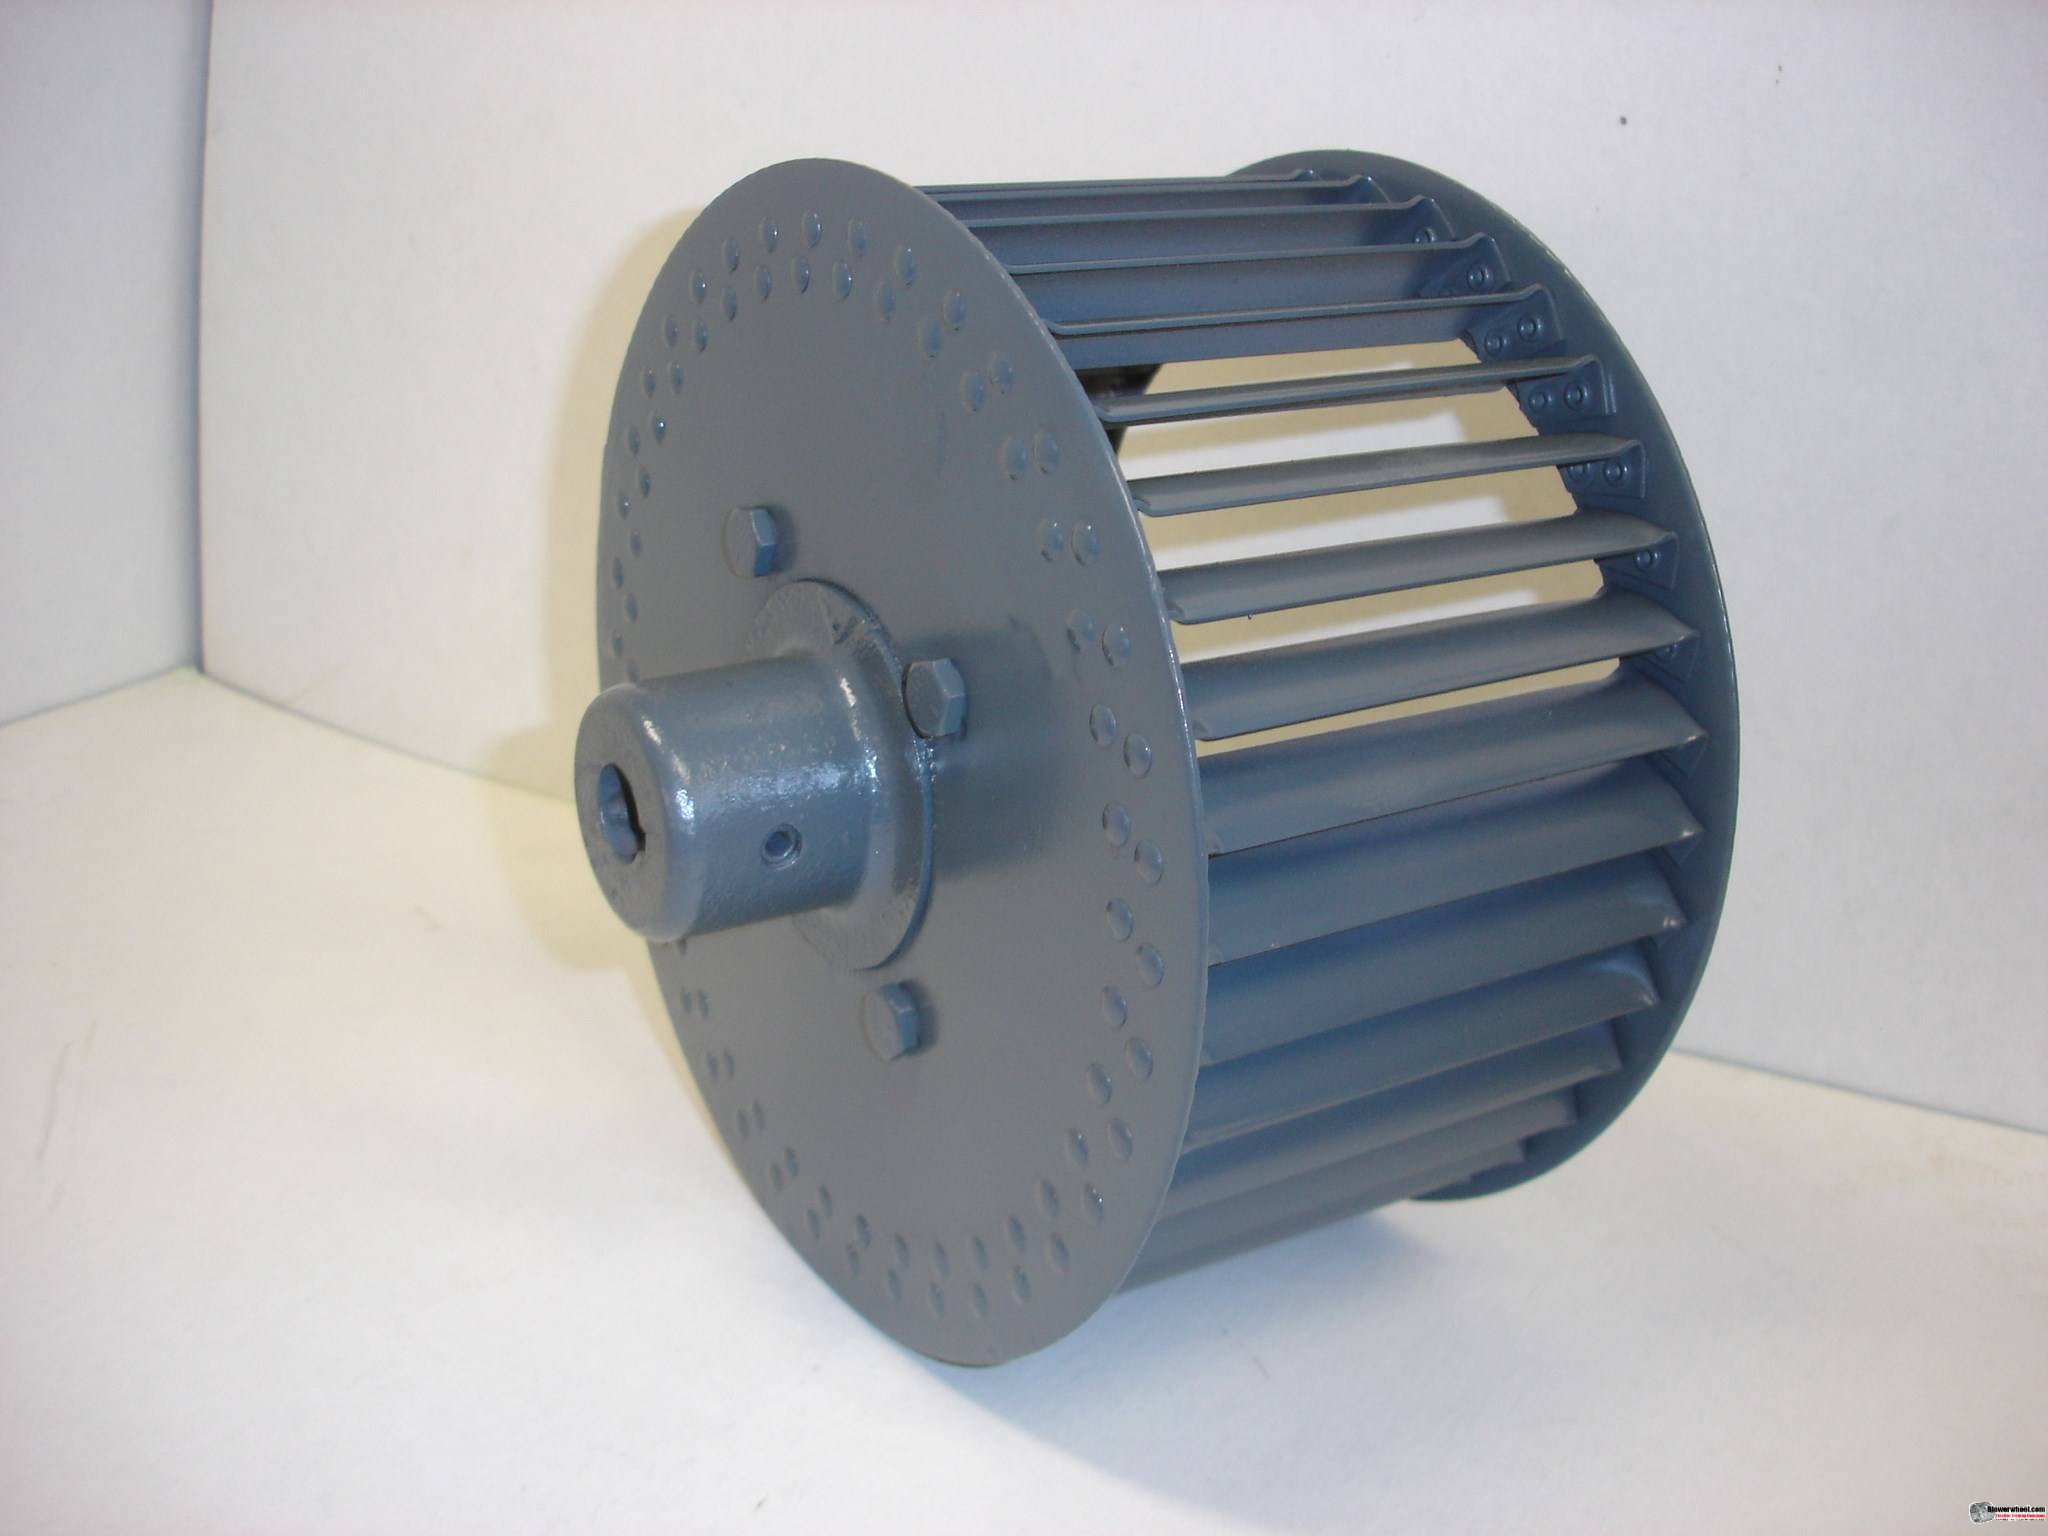 Single Inlet Steel Blower Wheel 10-13/16" Diameter 5-1/8" Width 3/4" Bore Clockwise rotation with an Outside Hub